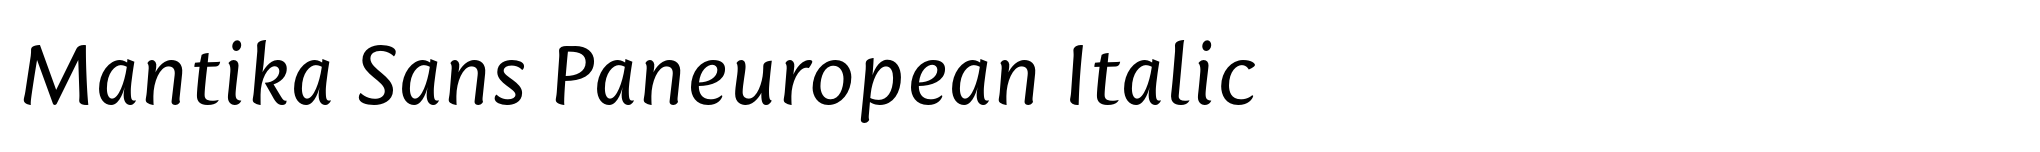 Mantika Sans Paneuropean Italic image